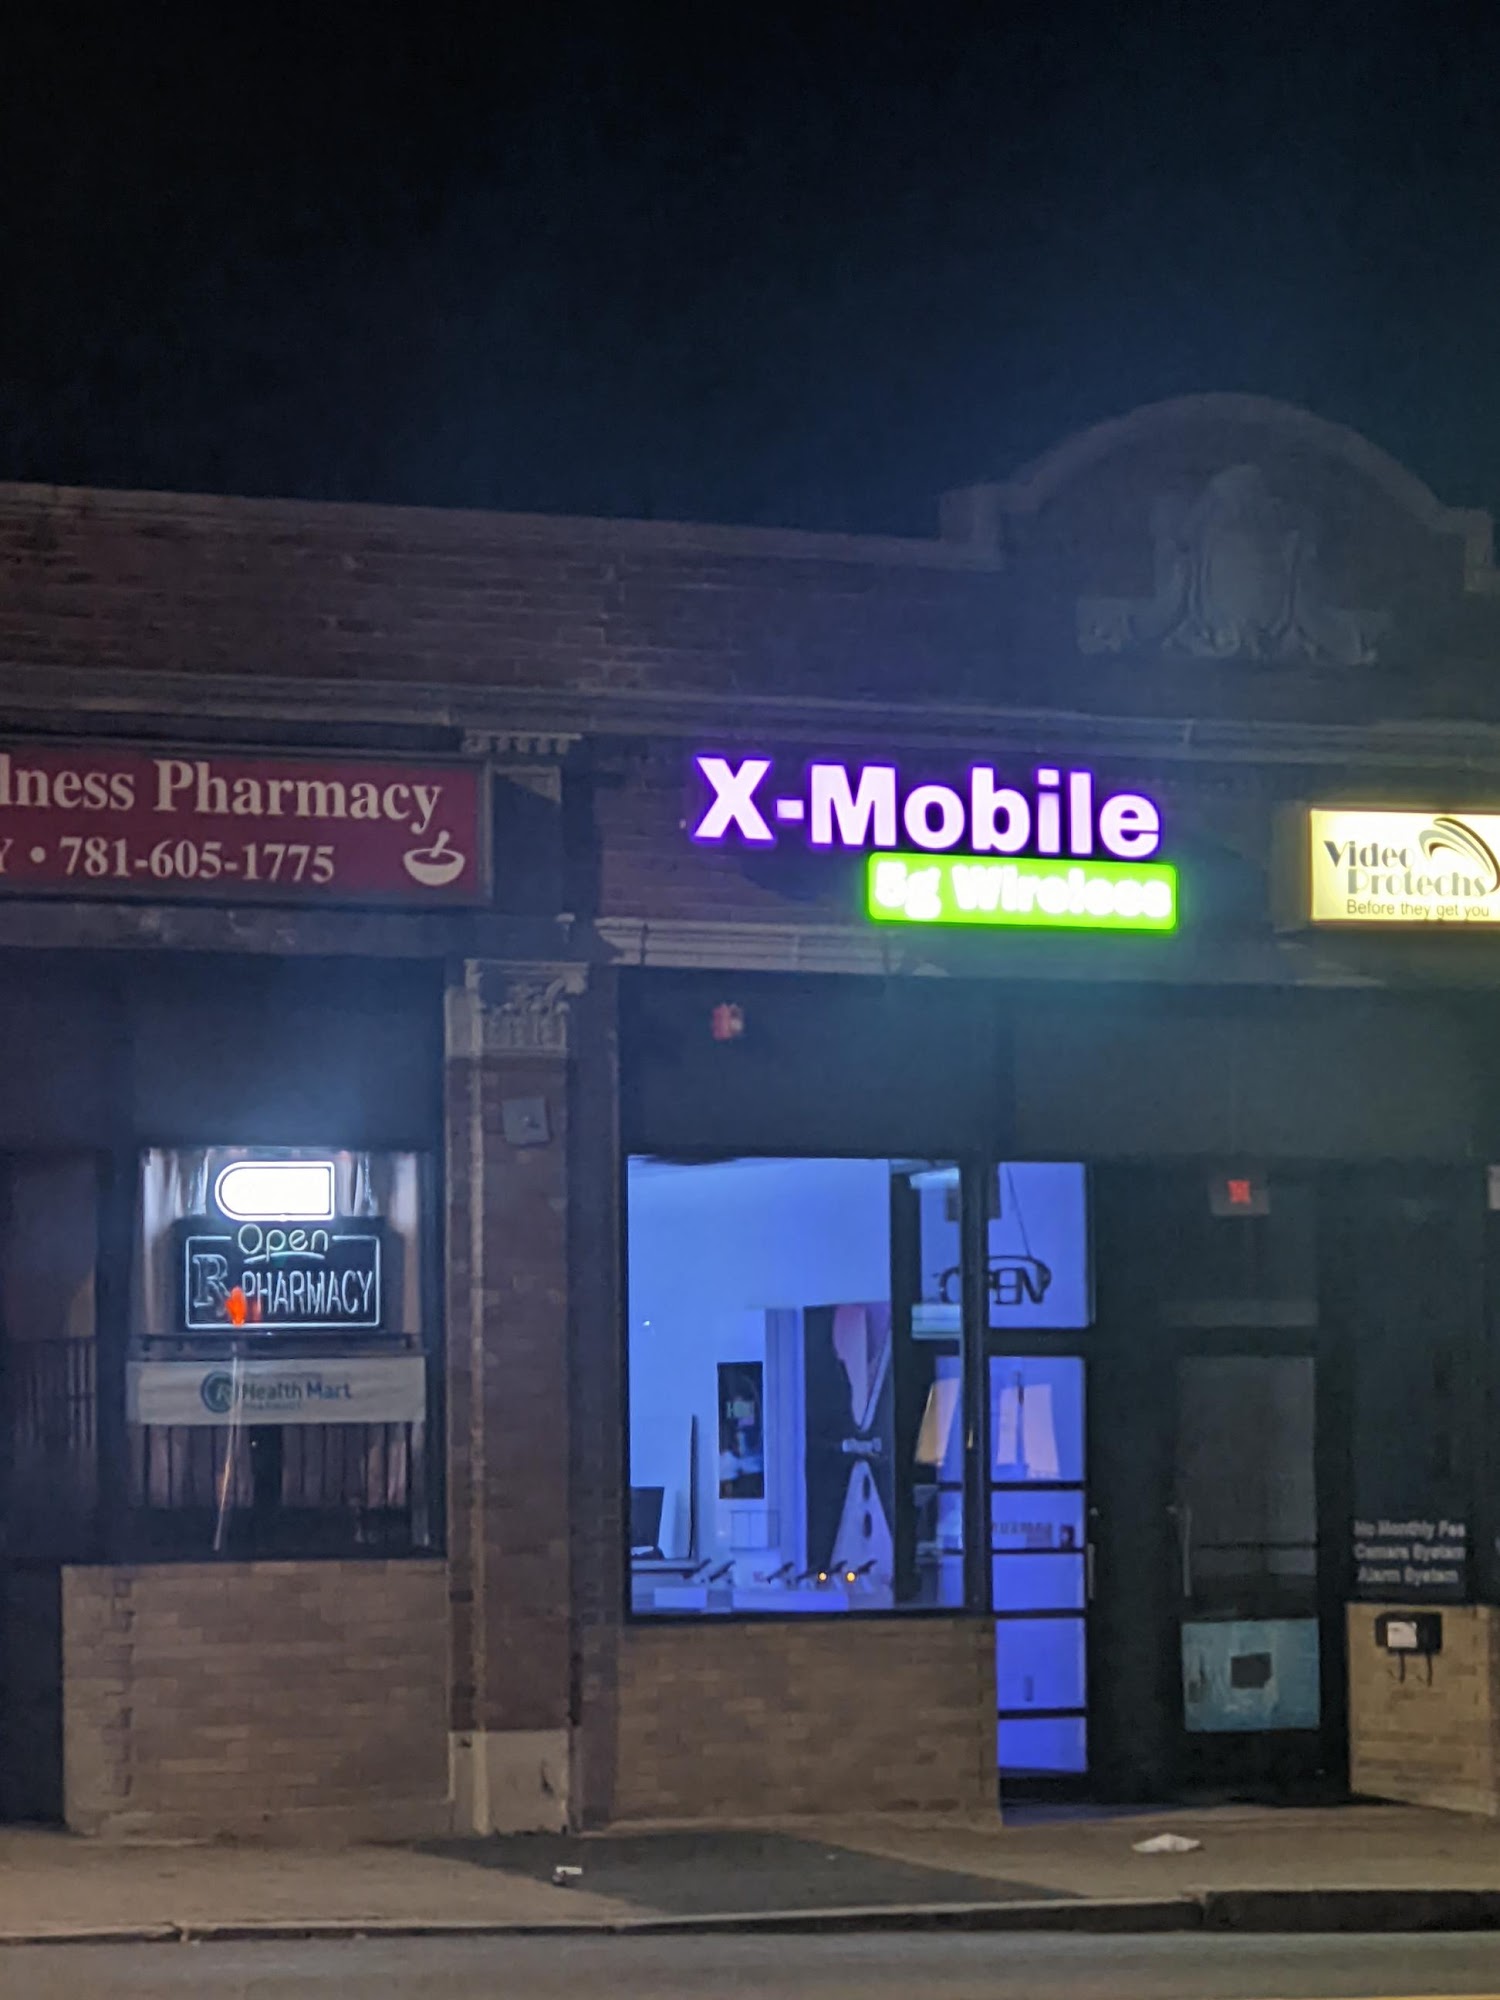 X-Mobile 5g Wireless